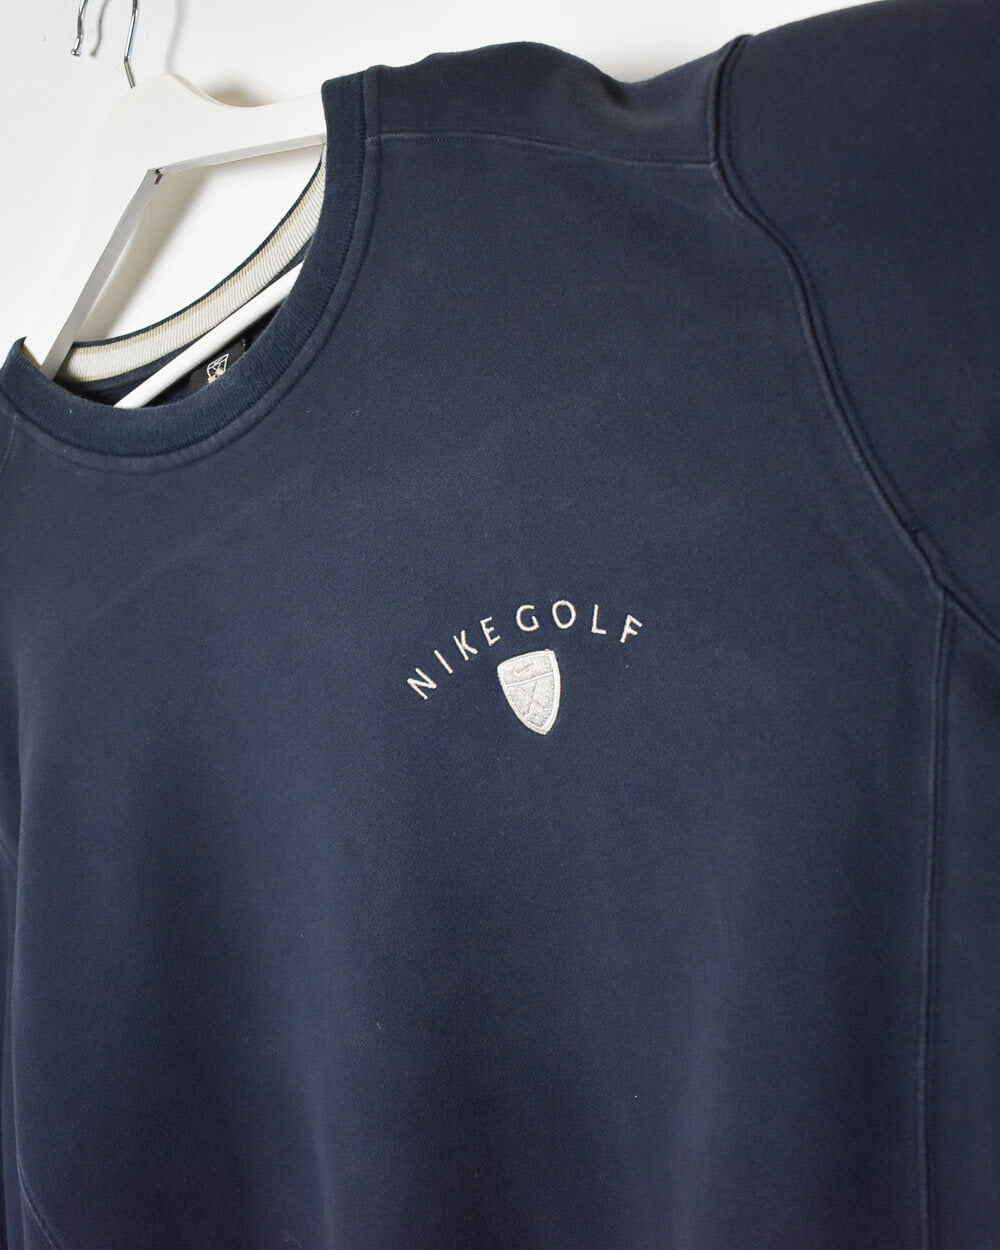 Navy Nike Golf Sweatshirt - X-Large